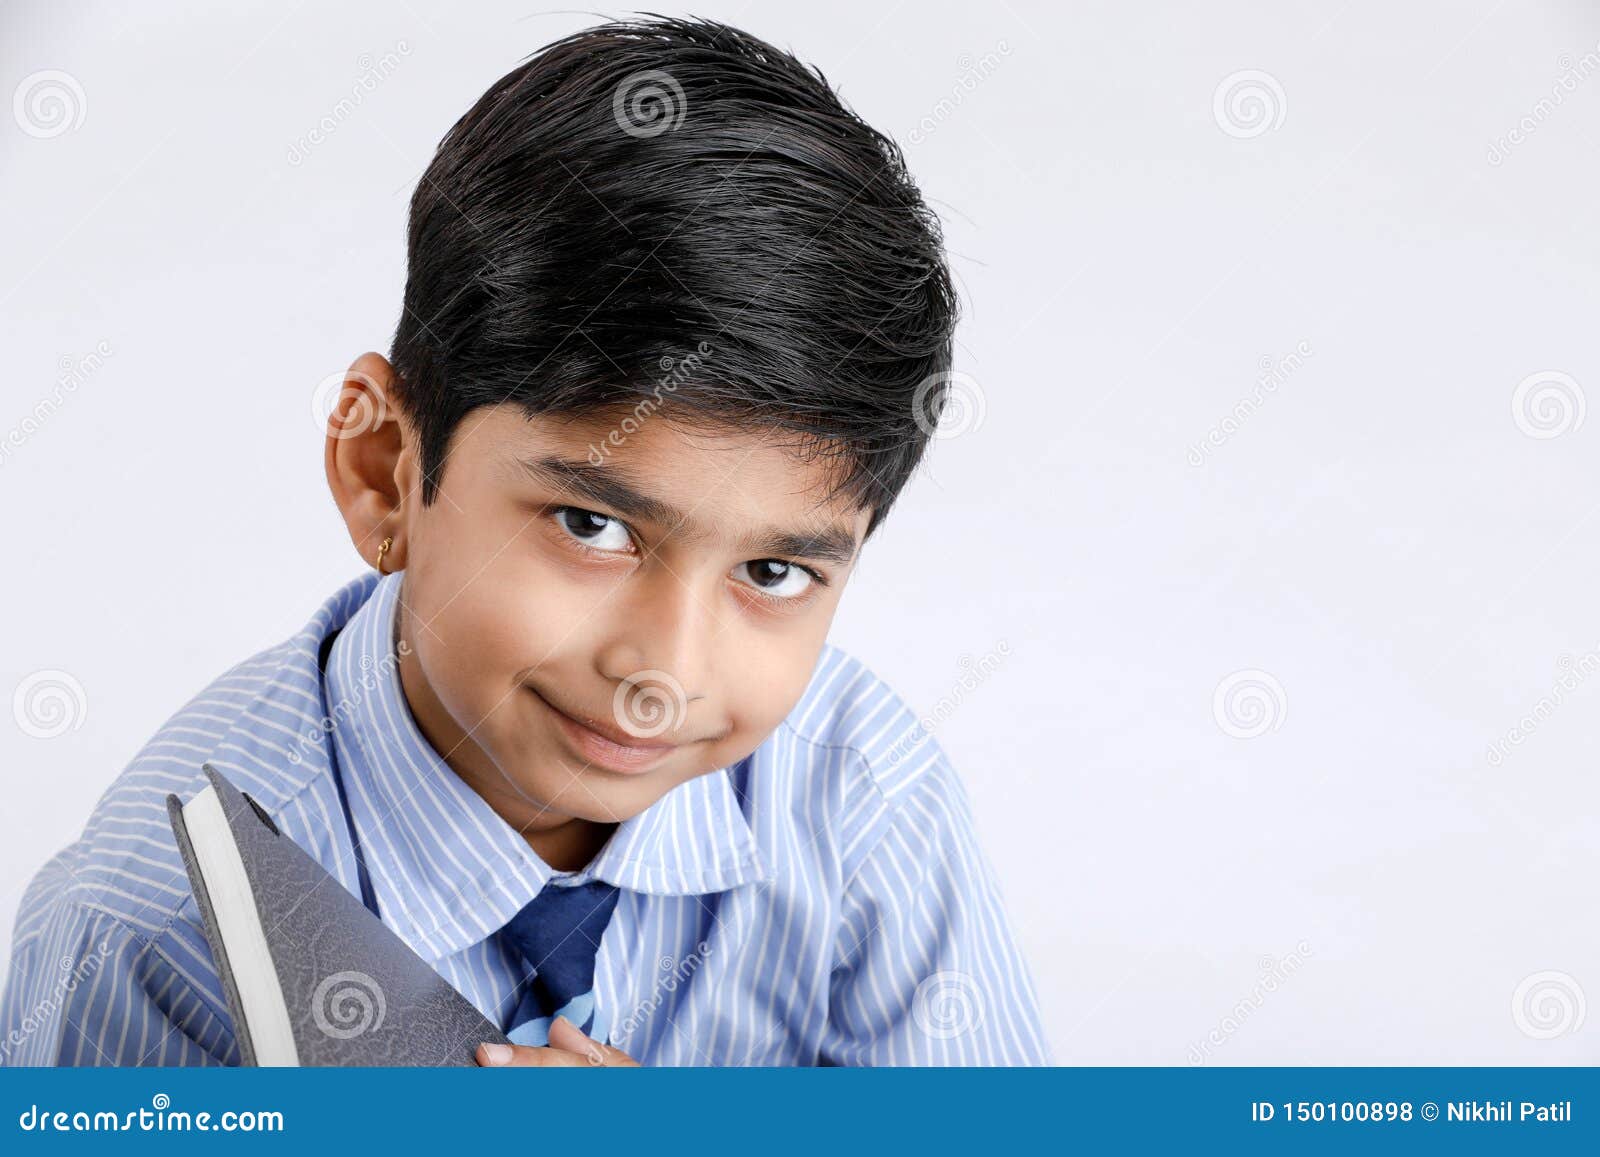 Cute Little Indian Indian / Asian School Boy Wearing Uniform Stock ...